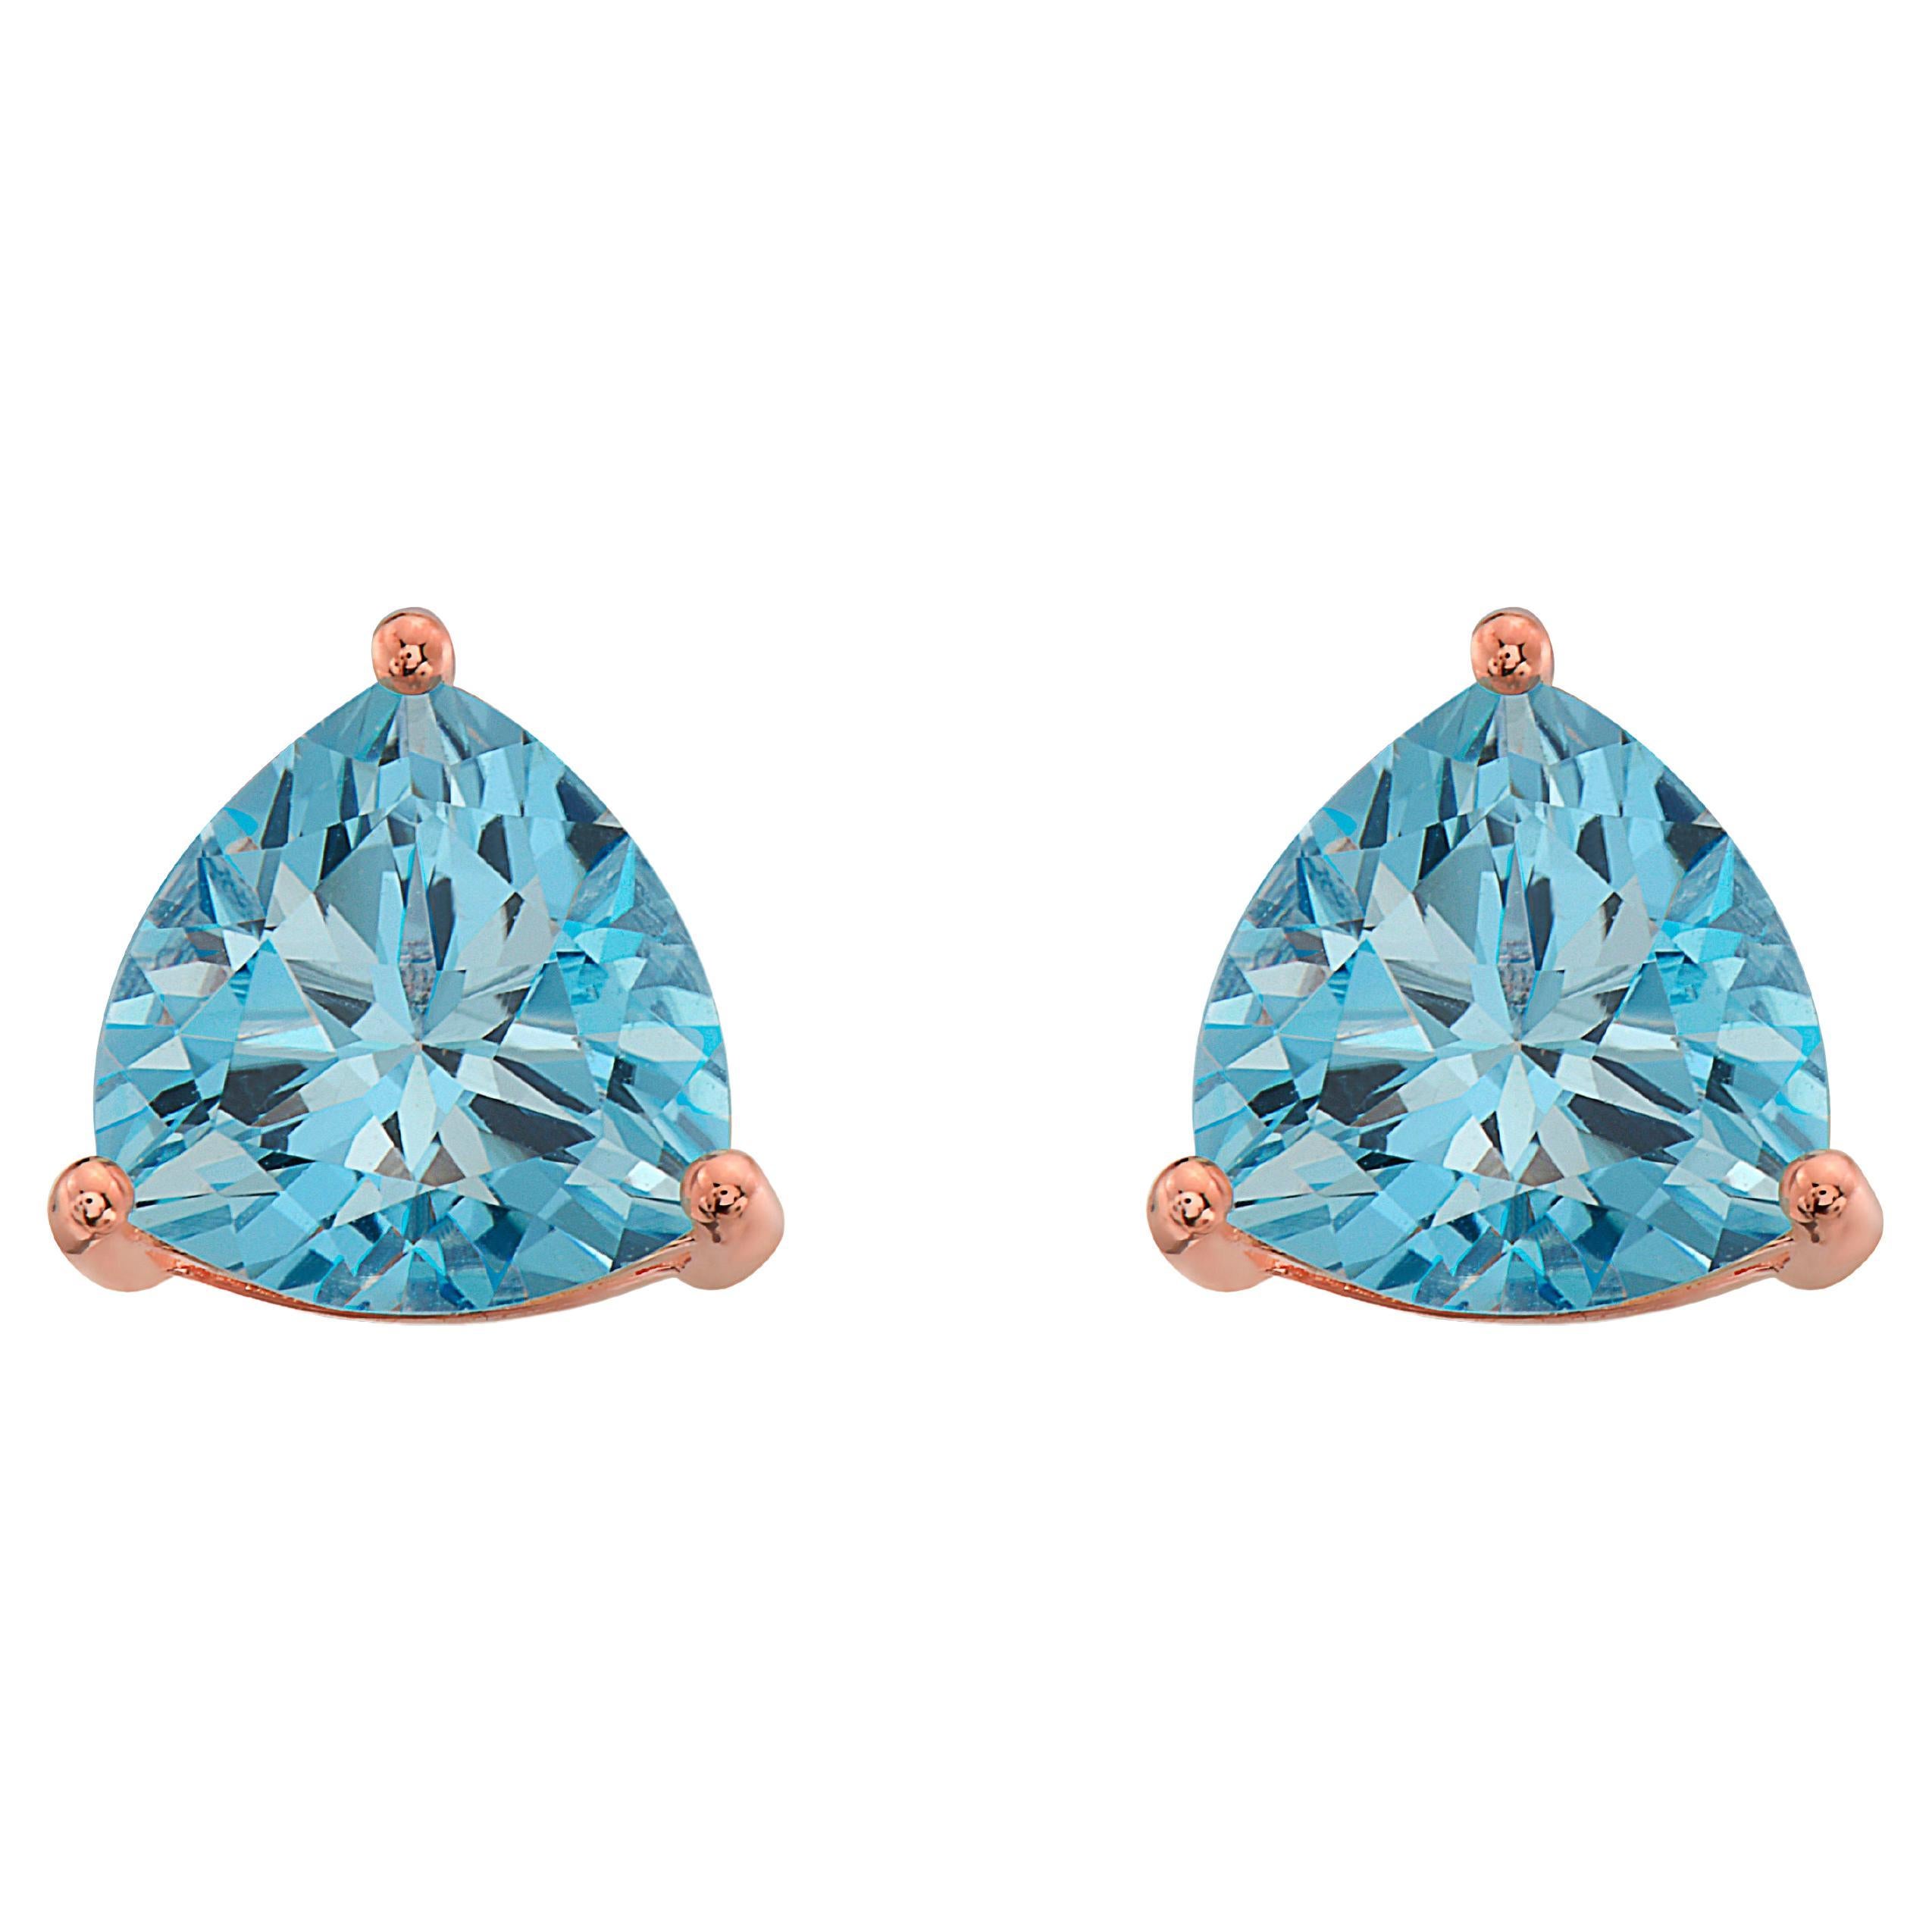 LeVian Rose Gold Plated Blue Topaz Gemstone Beautiful Trillion Cut Stud Earrings